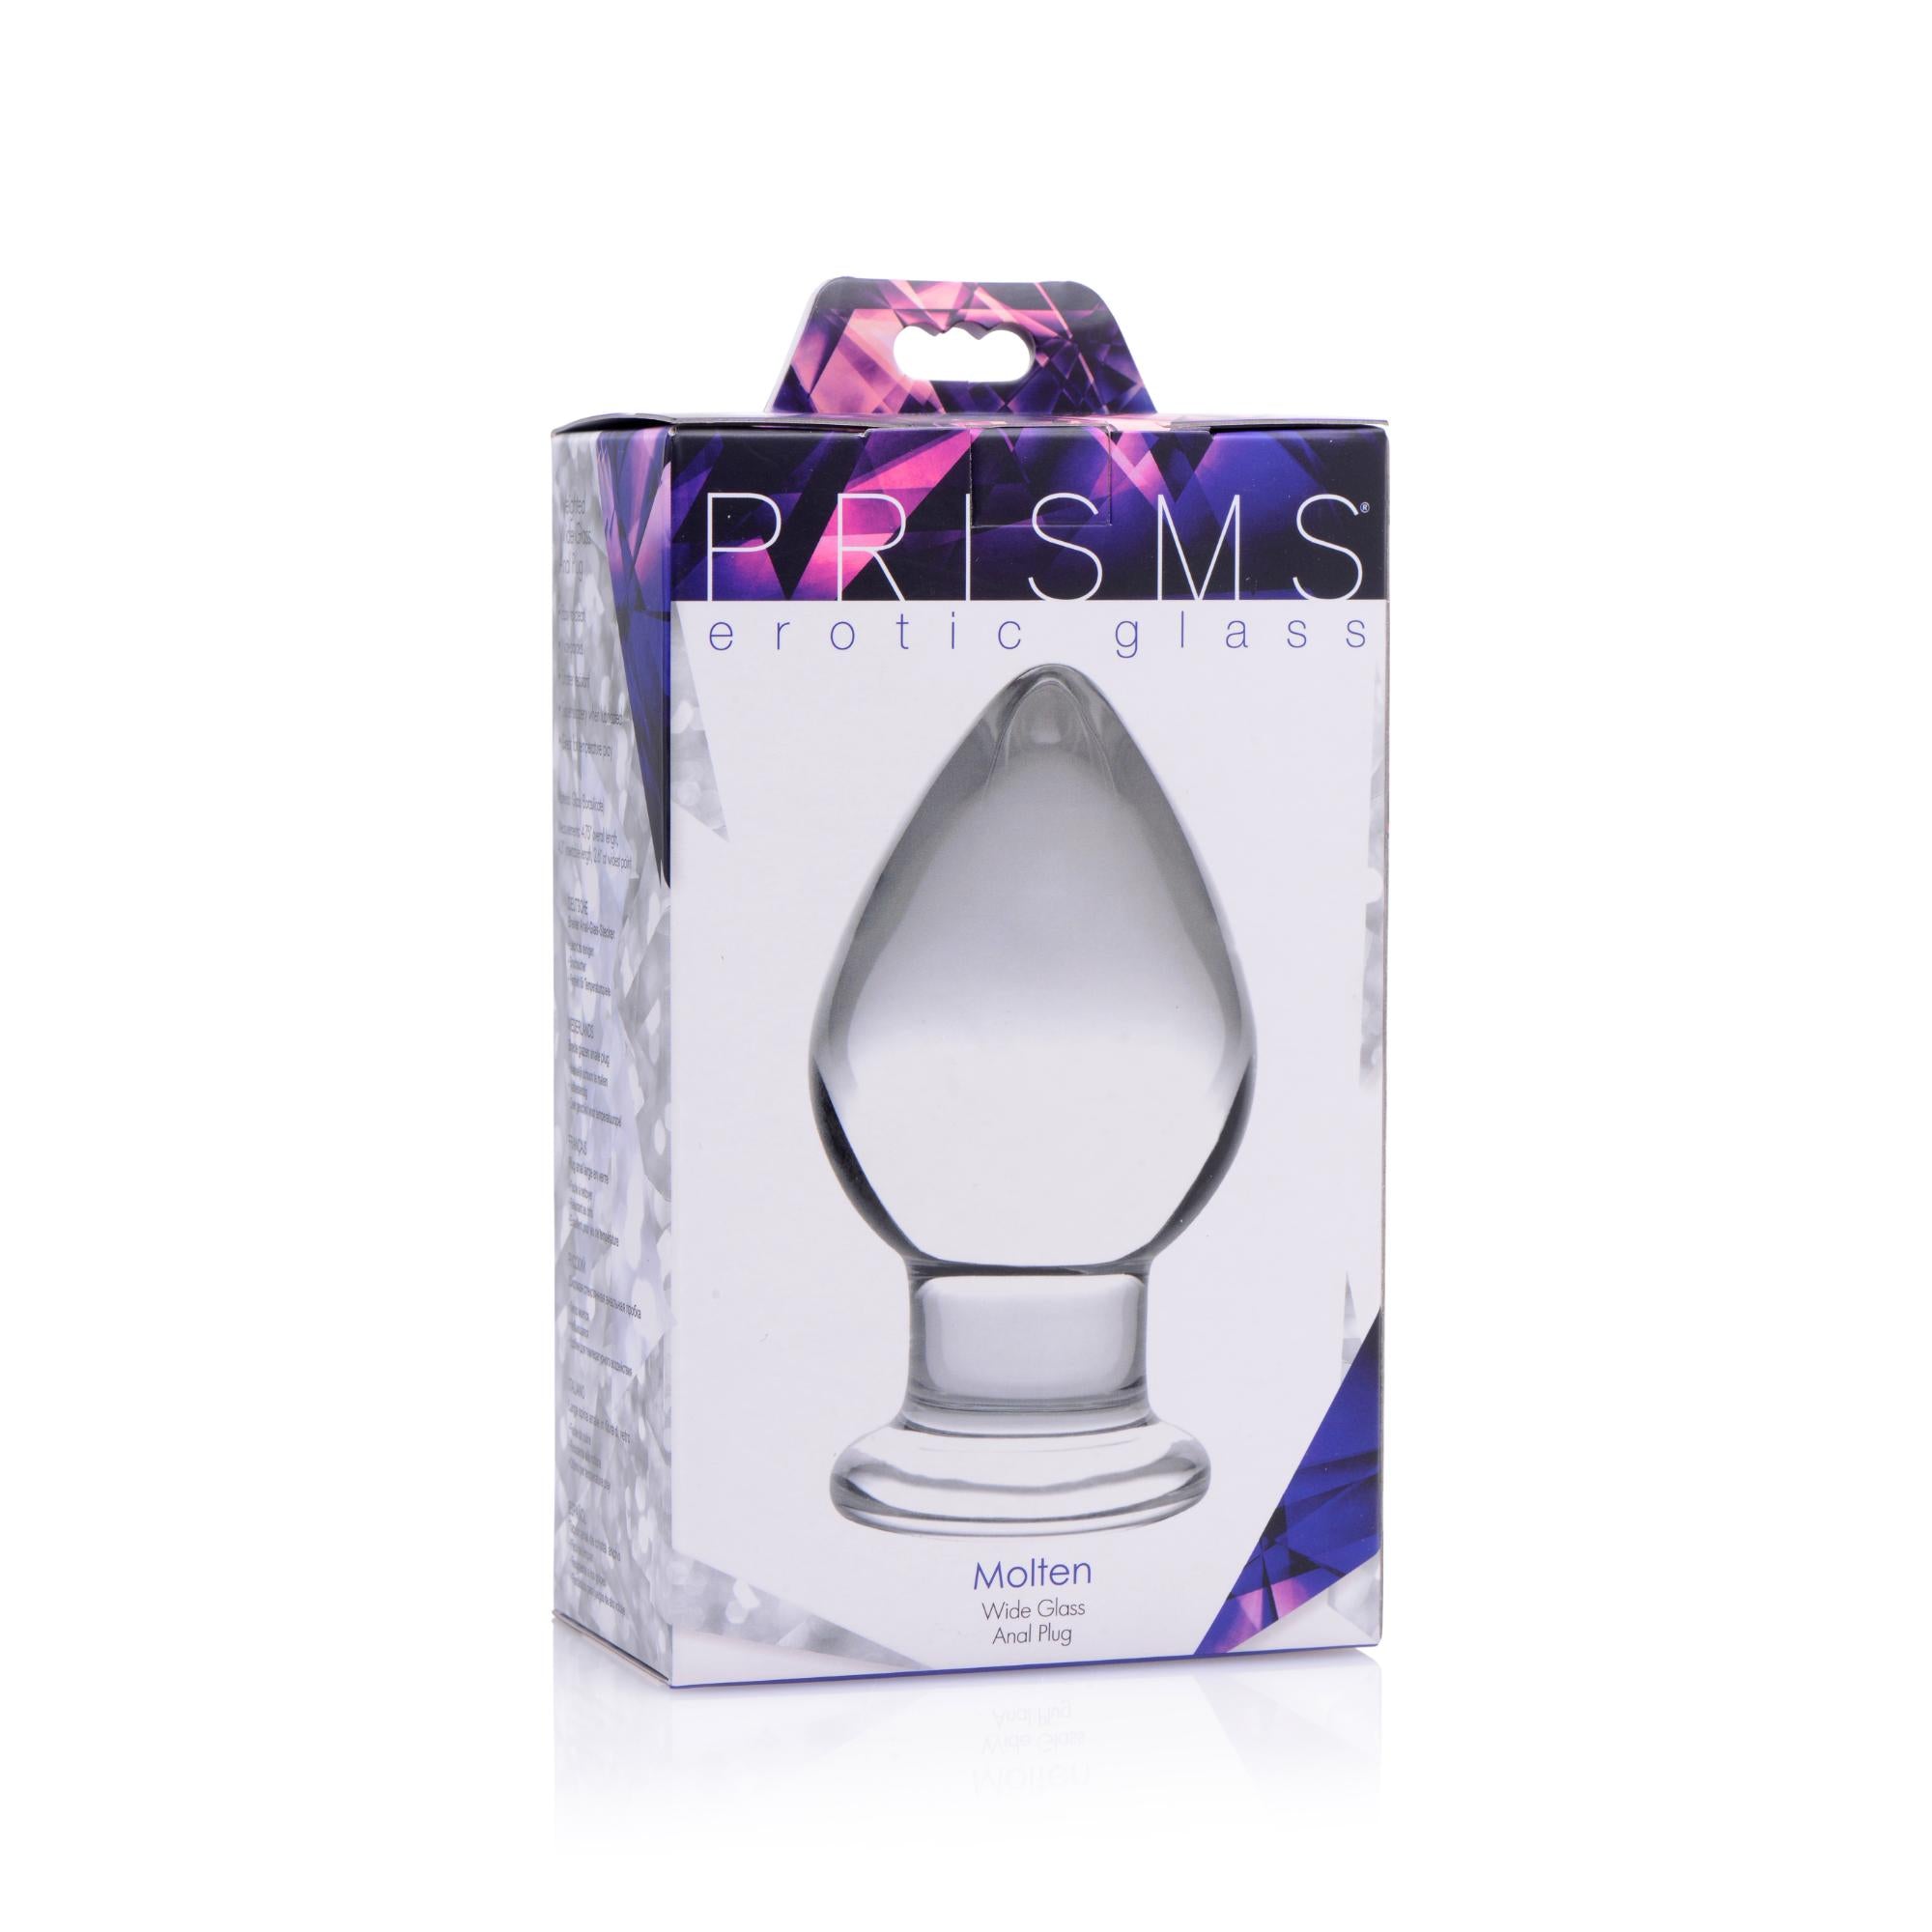 Prisms Erotic Glass Molten Wide Glass Butt Plug